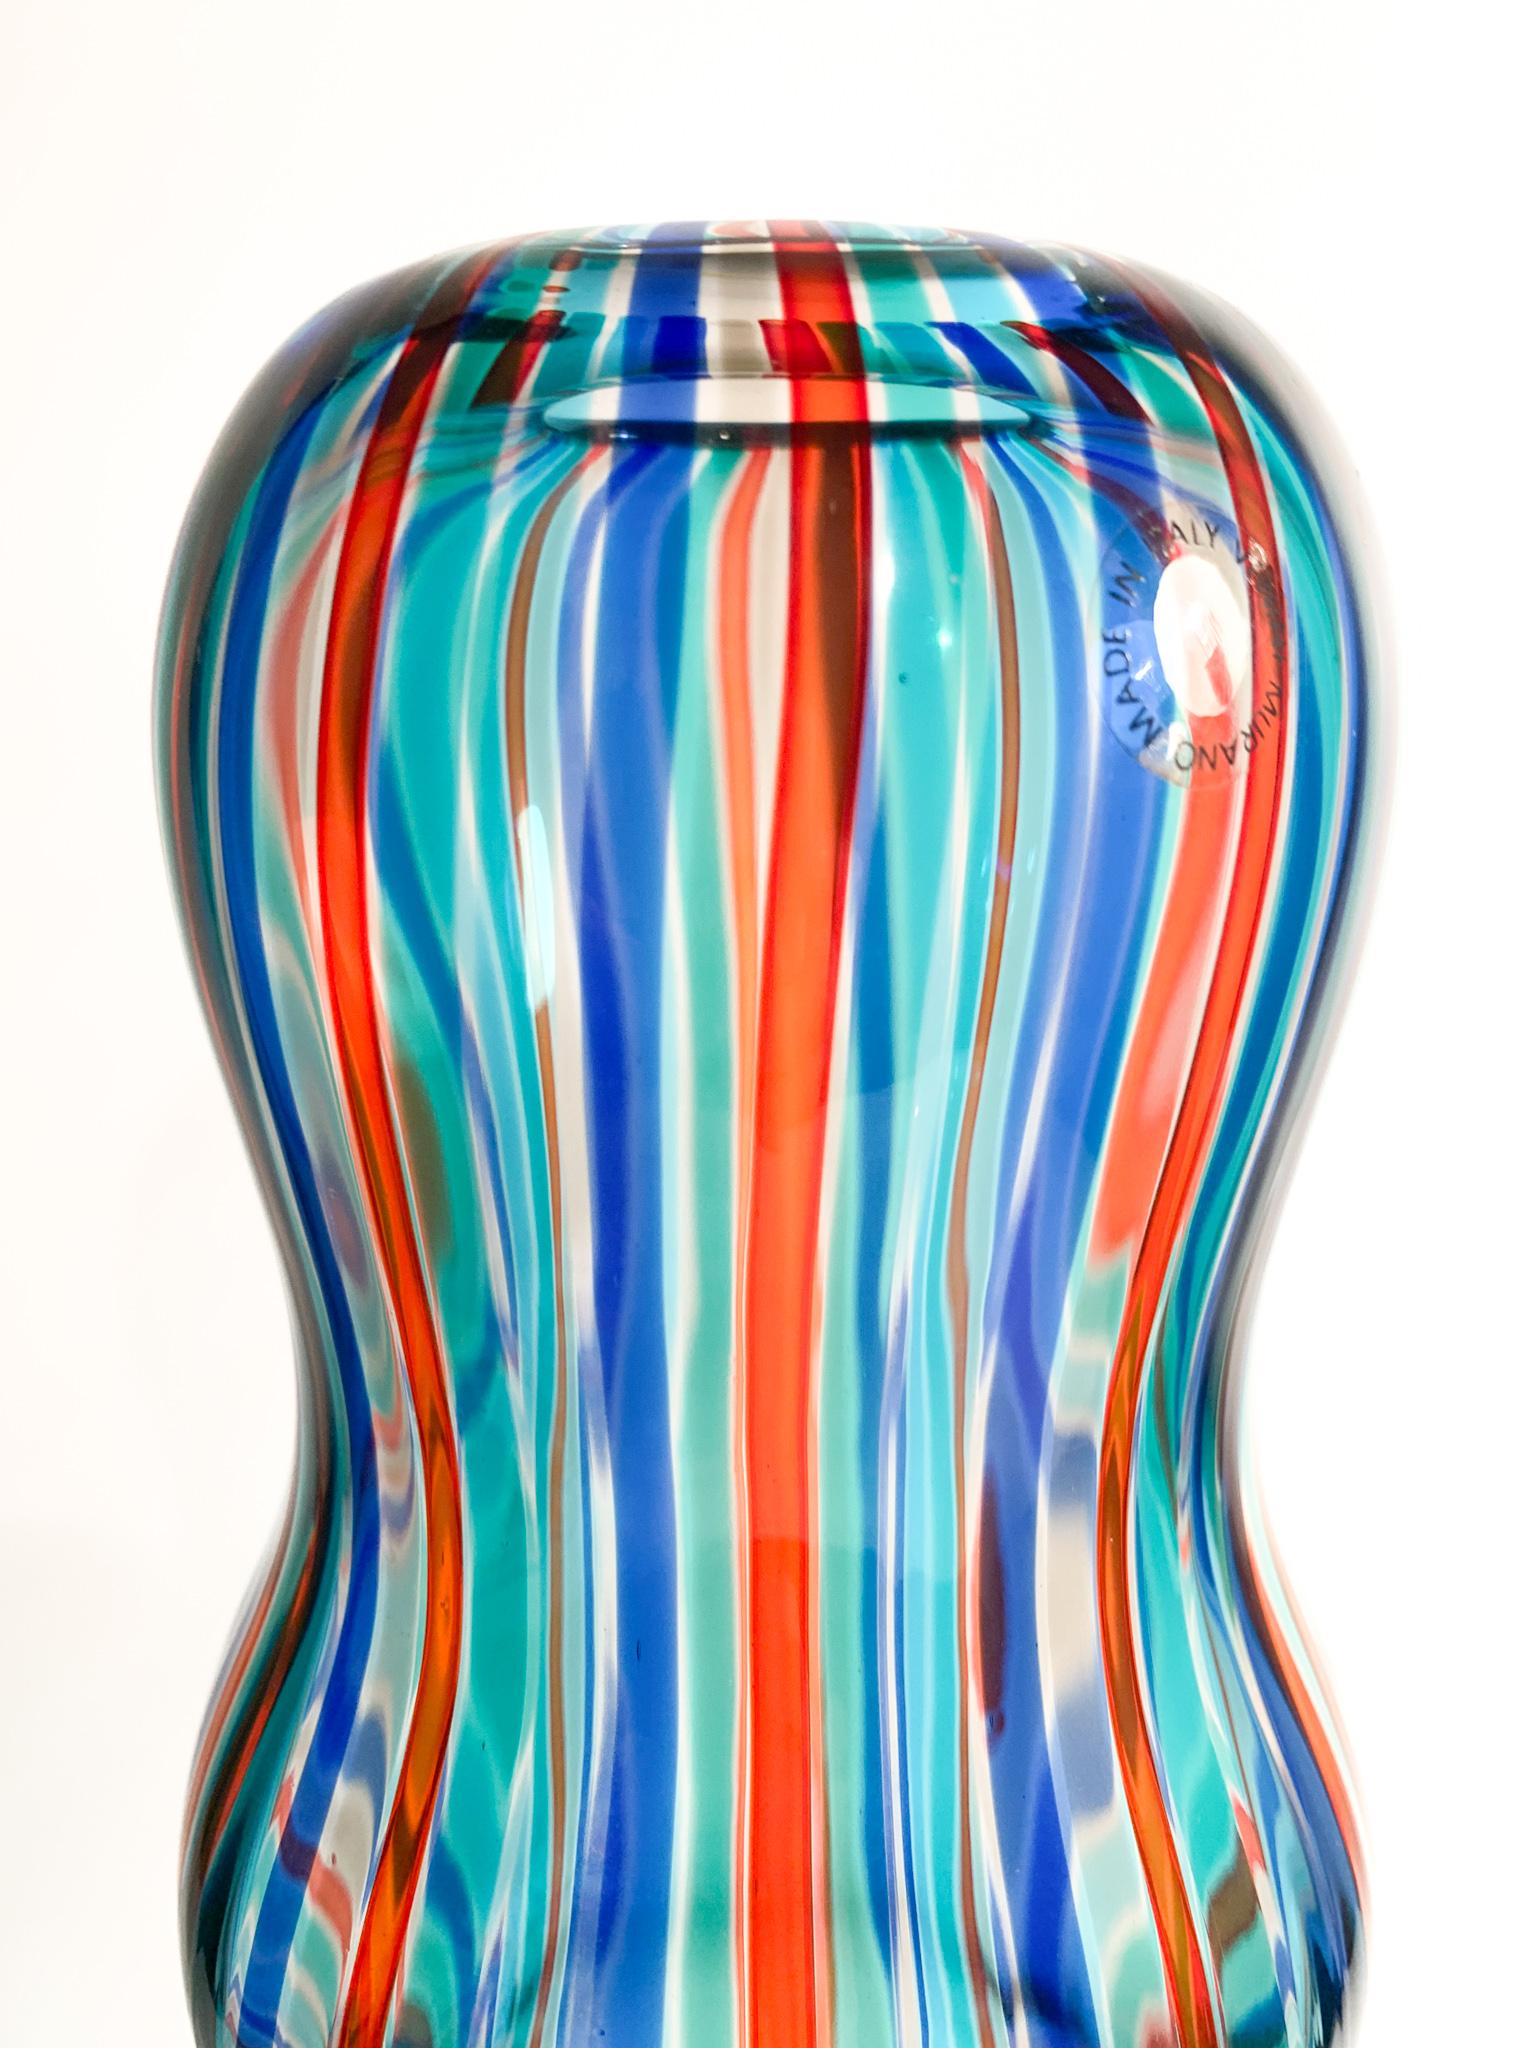 'Arado' Vase by Alessandro Mendini for Venini from 1988 For Sale 1